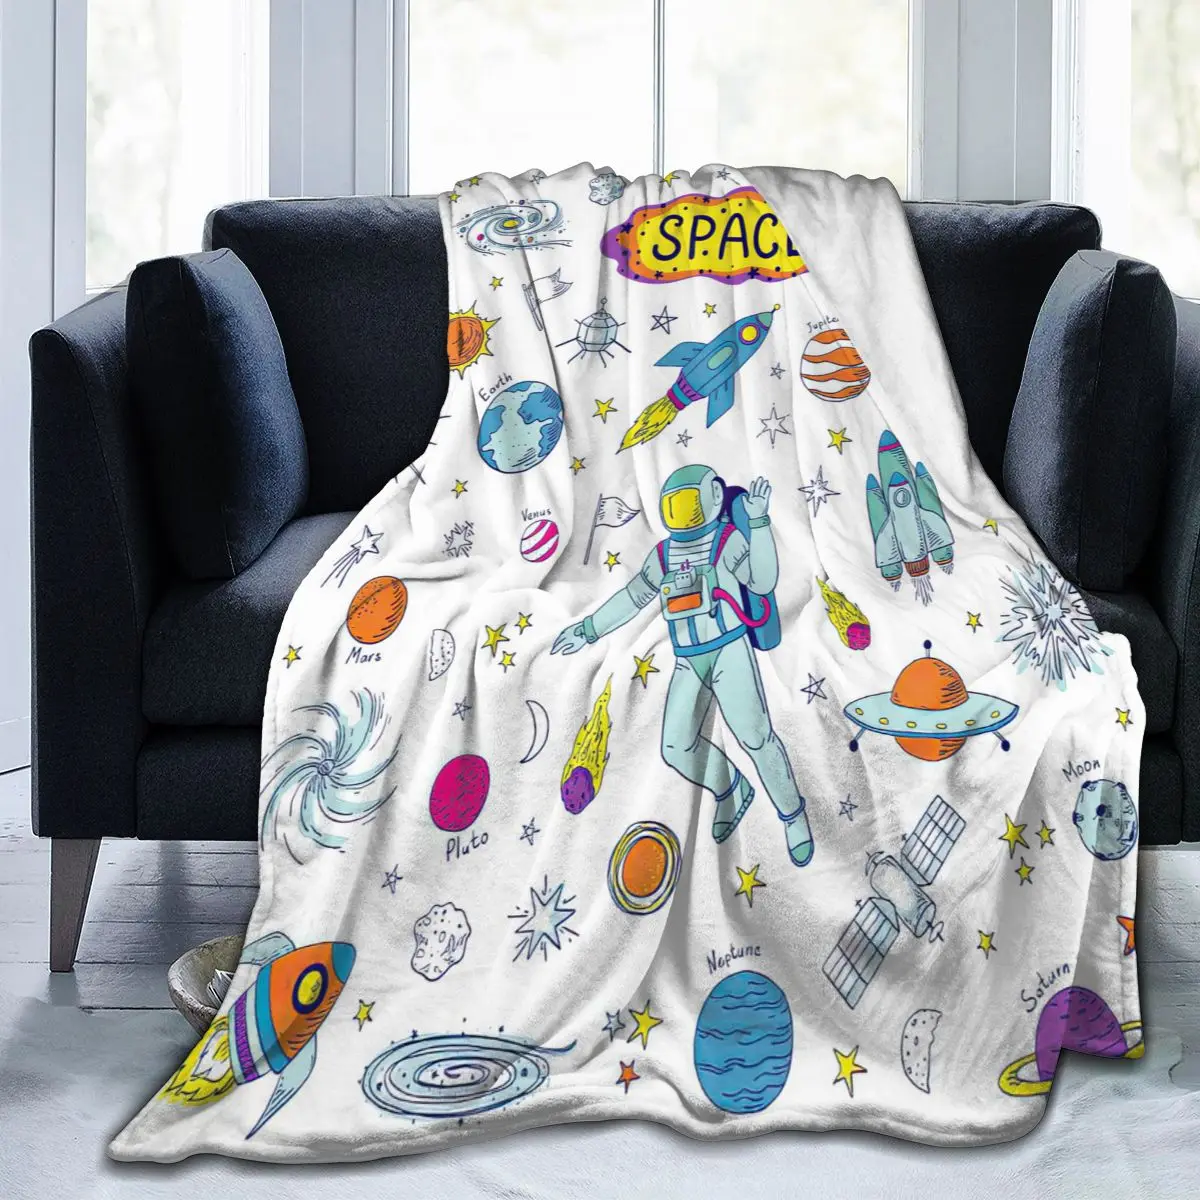 

Super soft sofa blanket plaid collage sublimation cartoon animation bedding flannel plaid blanket bedroom decorative blanket 11